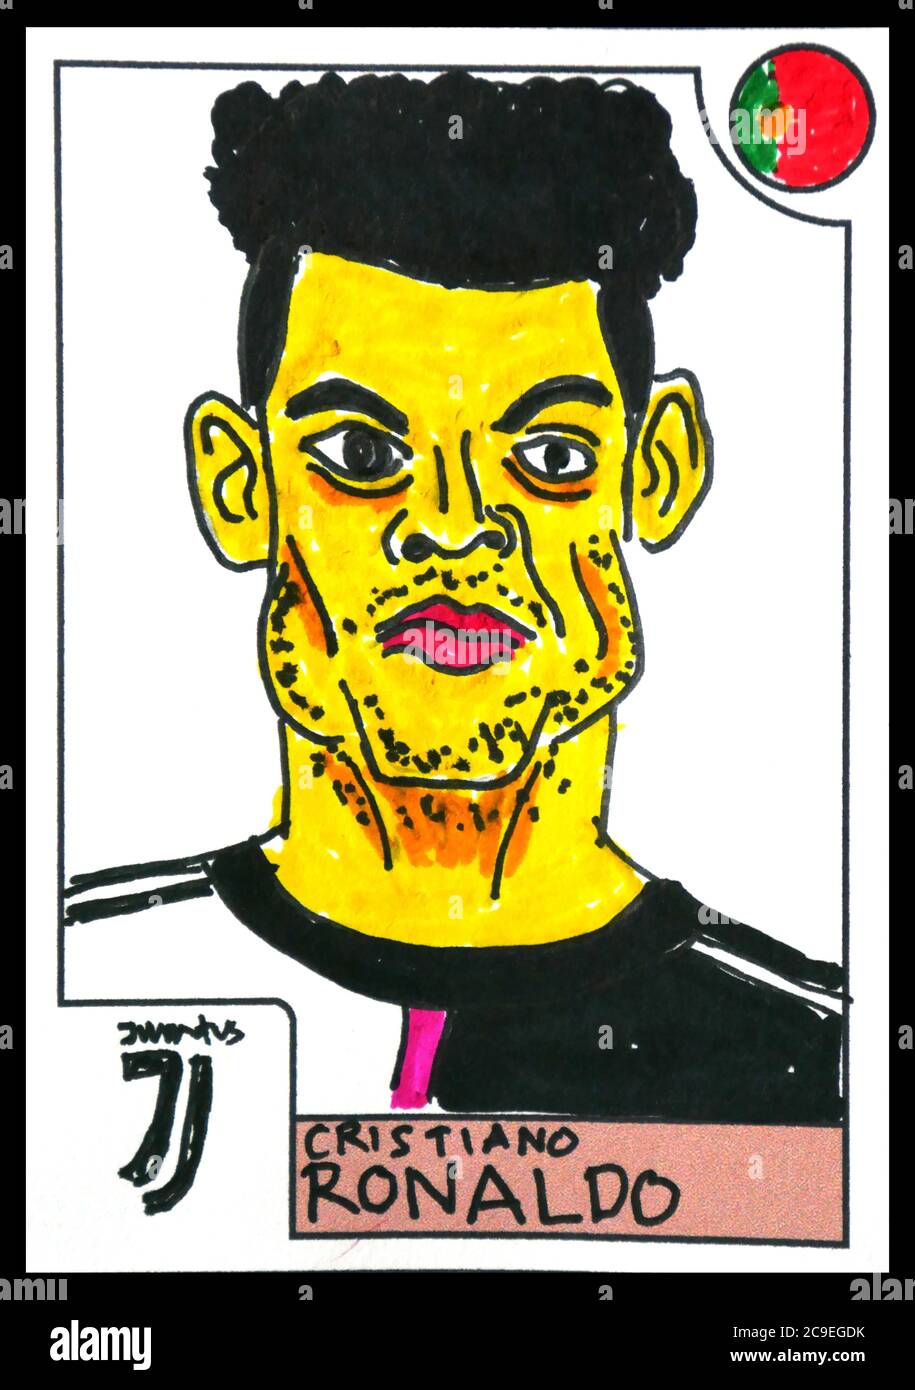 Caricature of Portuguese football player Cristiano Ronaldo in Juventus Shirt. Stock Photo